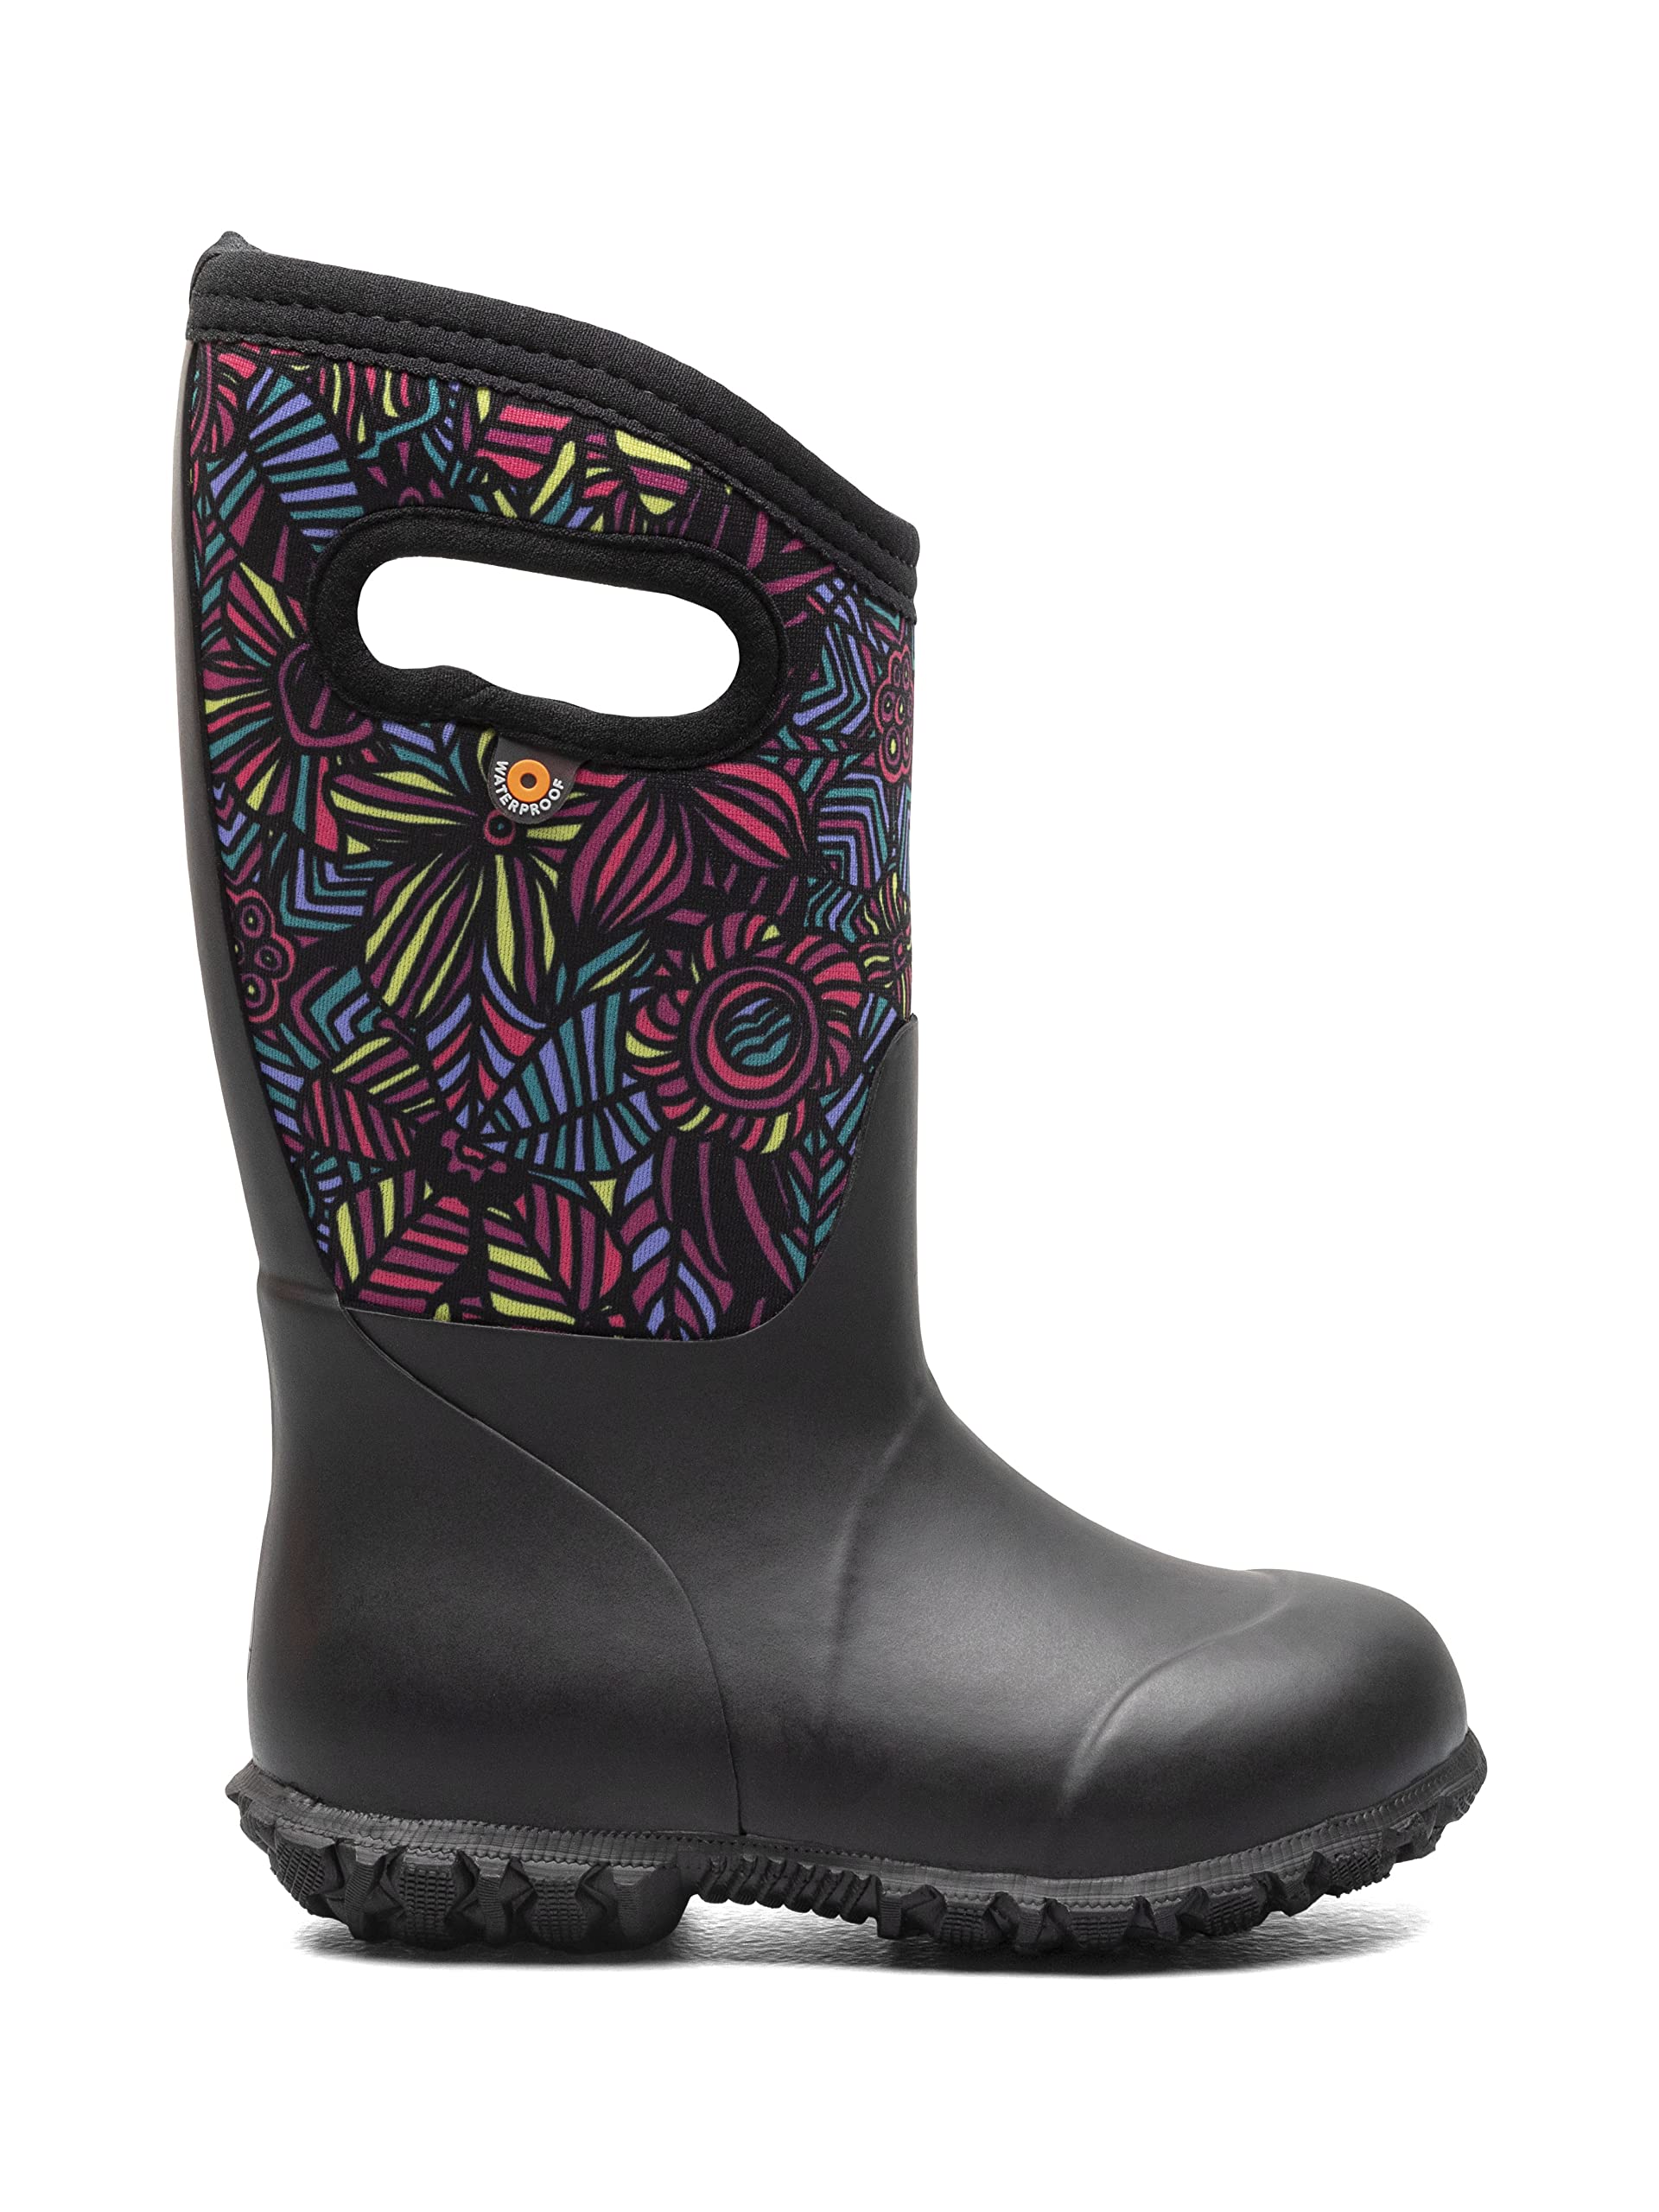 BOGS Unisex-Child Kids York Boys and Girls Waterproof Insulated Rubber and Neoprene Winter Rain Boot